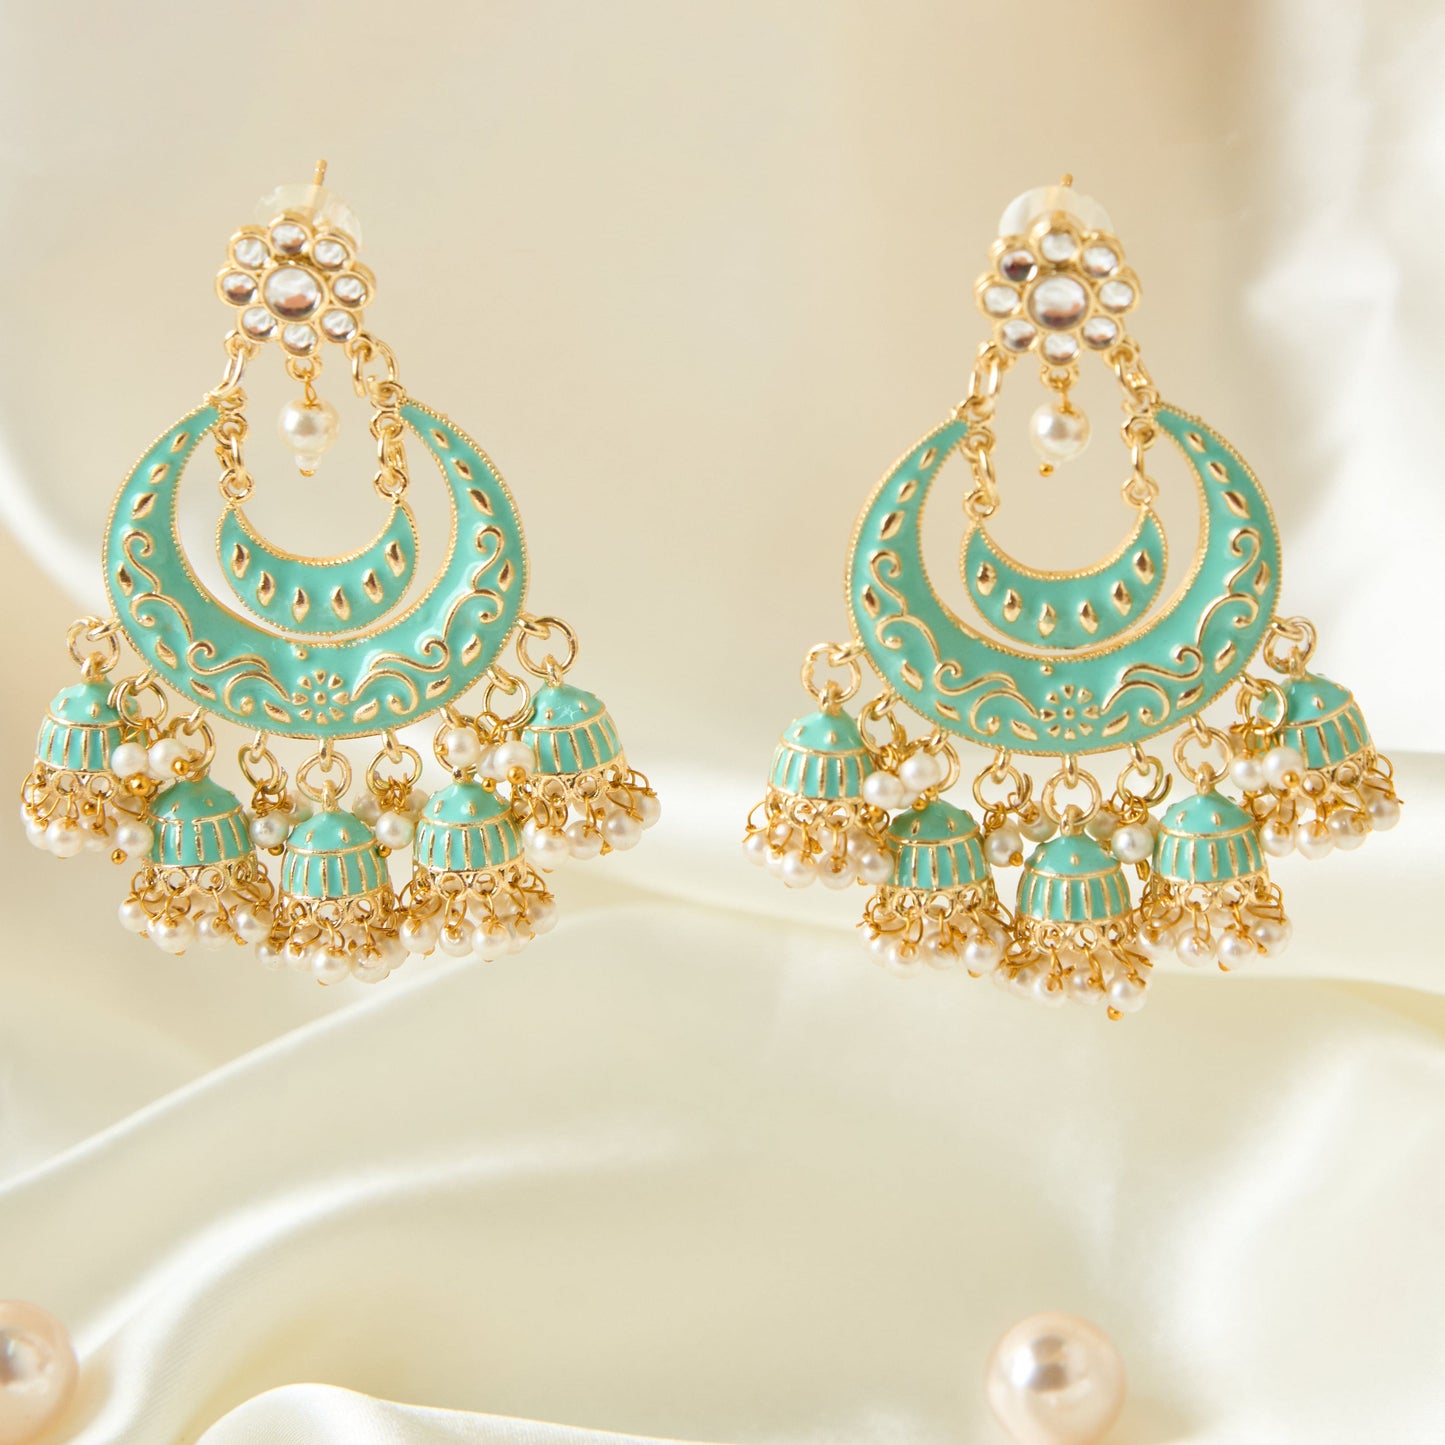 Moonstruck Golden/Gold Chandbali/Bali Dangle Earrings with Kundan,Meenakari & Pearls - Elevate Your Ethnic Indian Glamour look for Women & Girls - www.MoonstruckINC.com